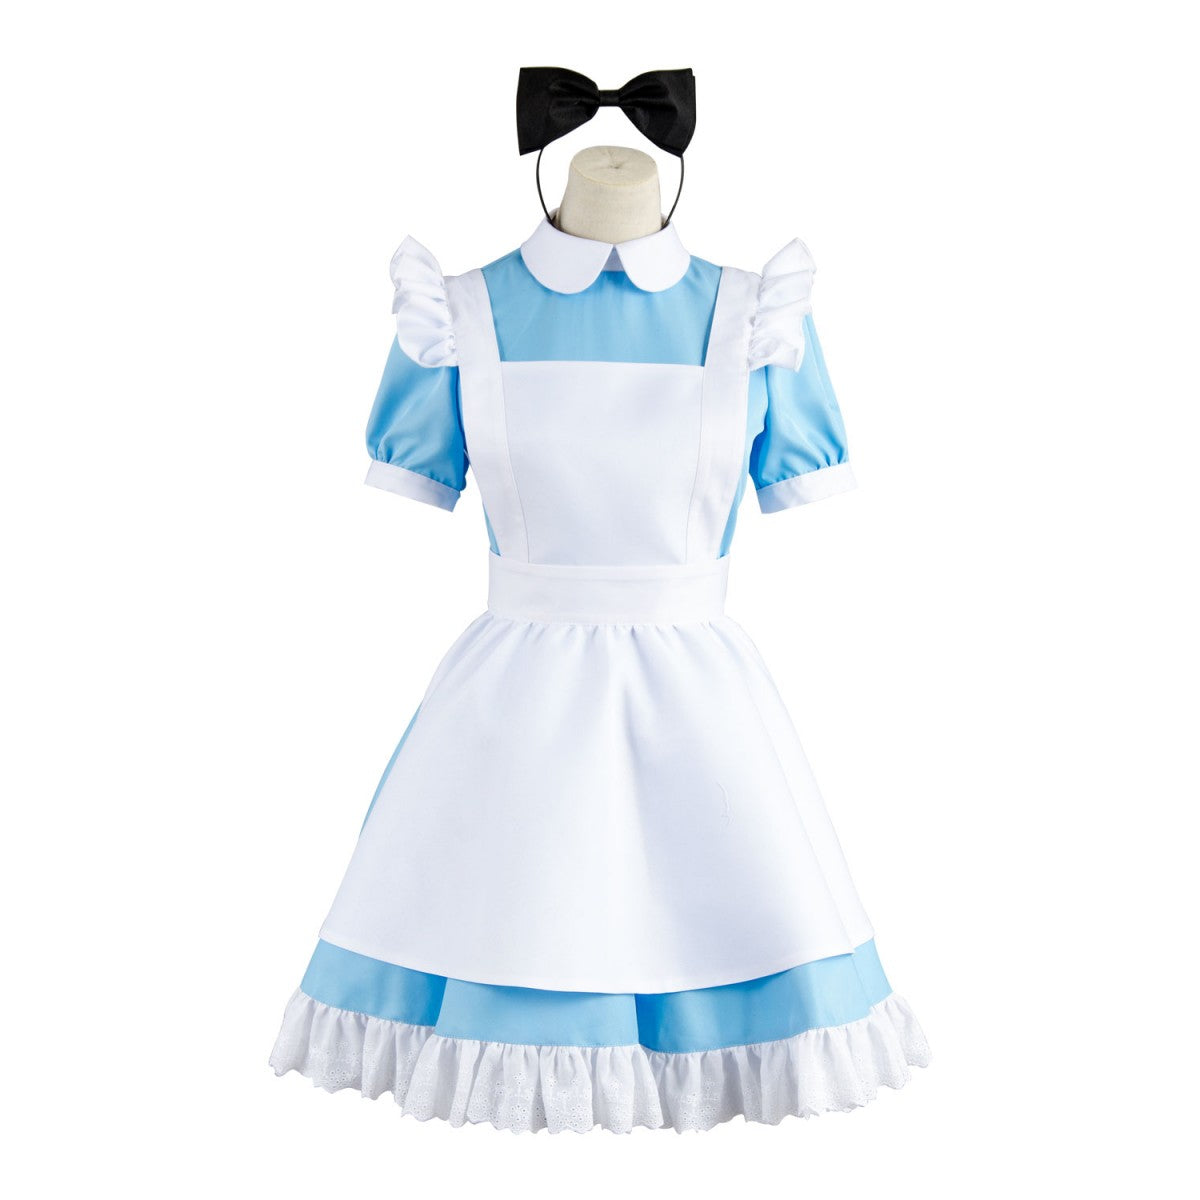 Alice Dress Size Chart